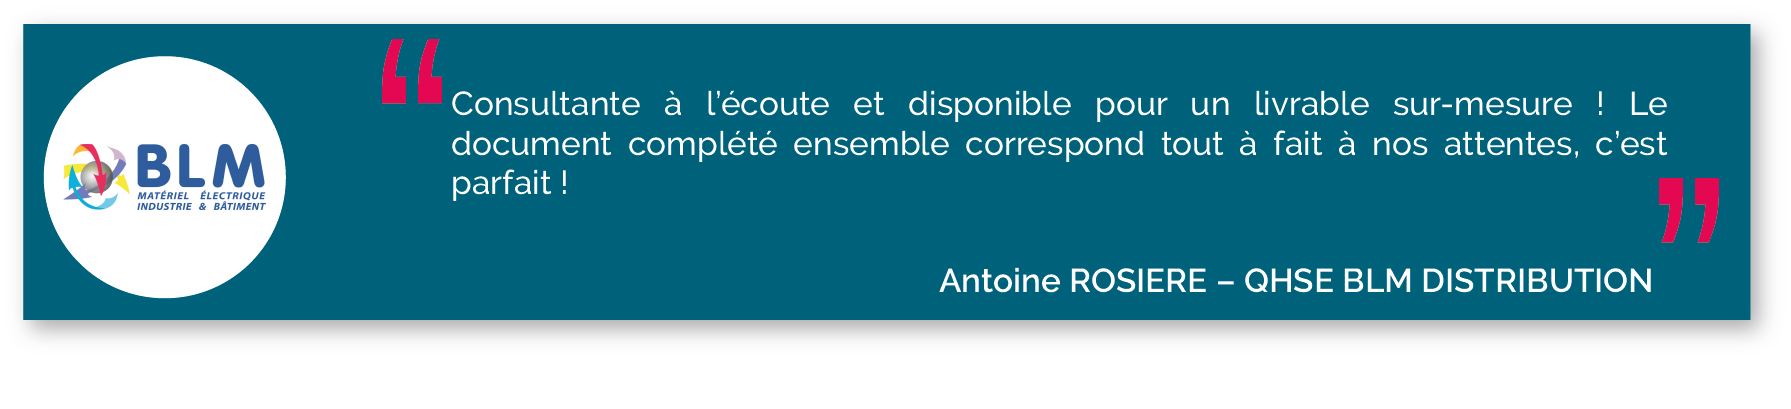 Antoine rosiere blm distribution